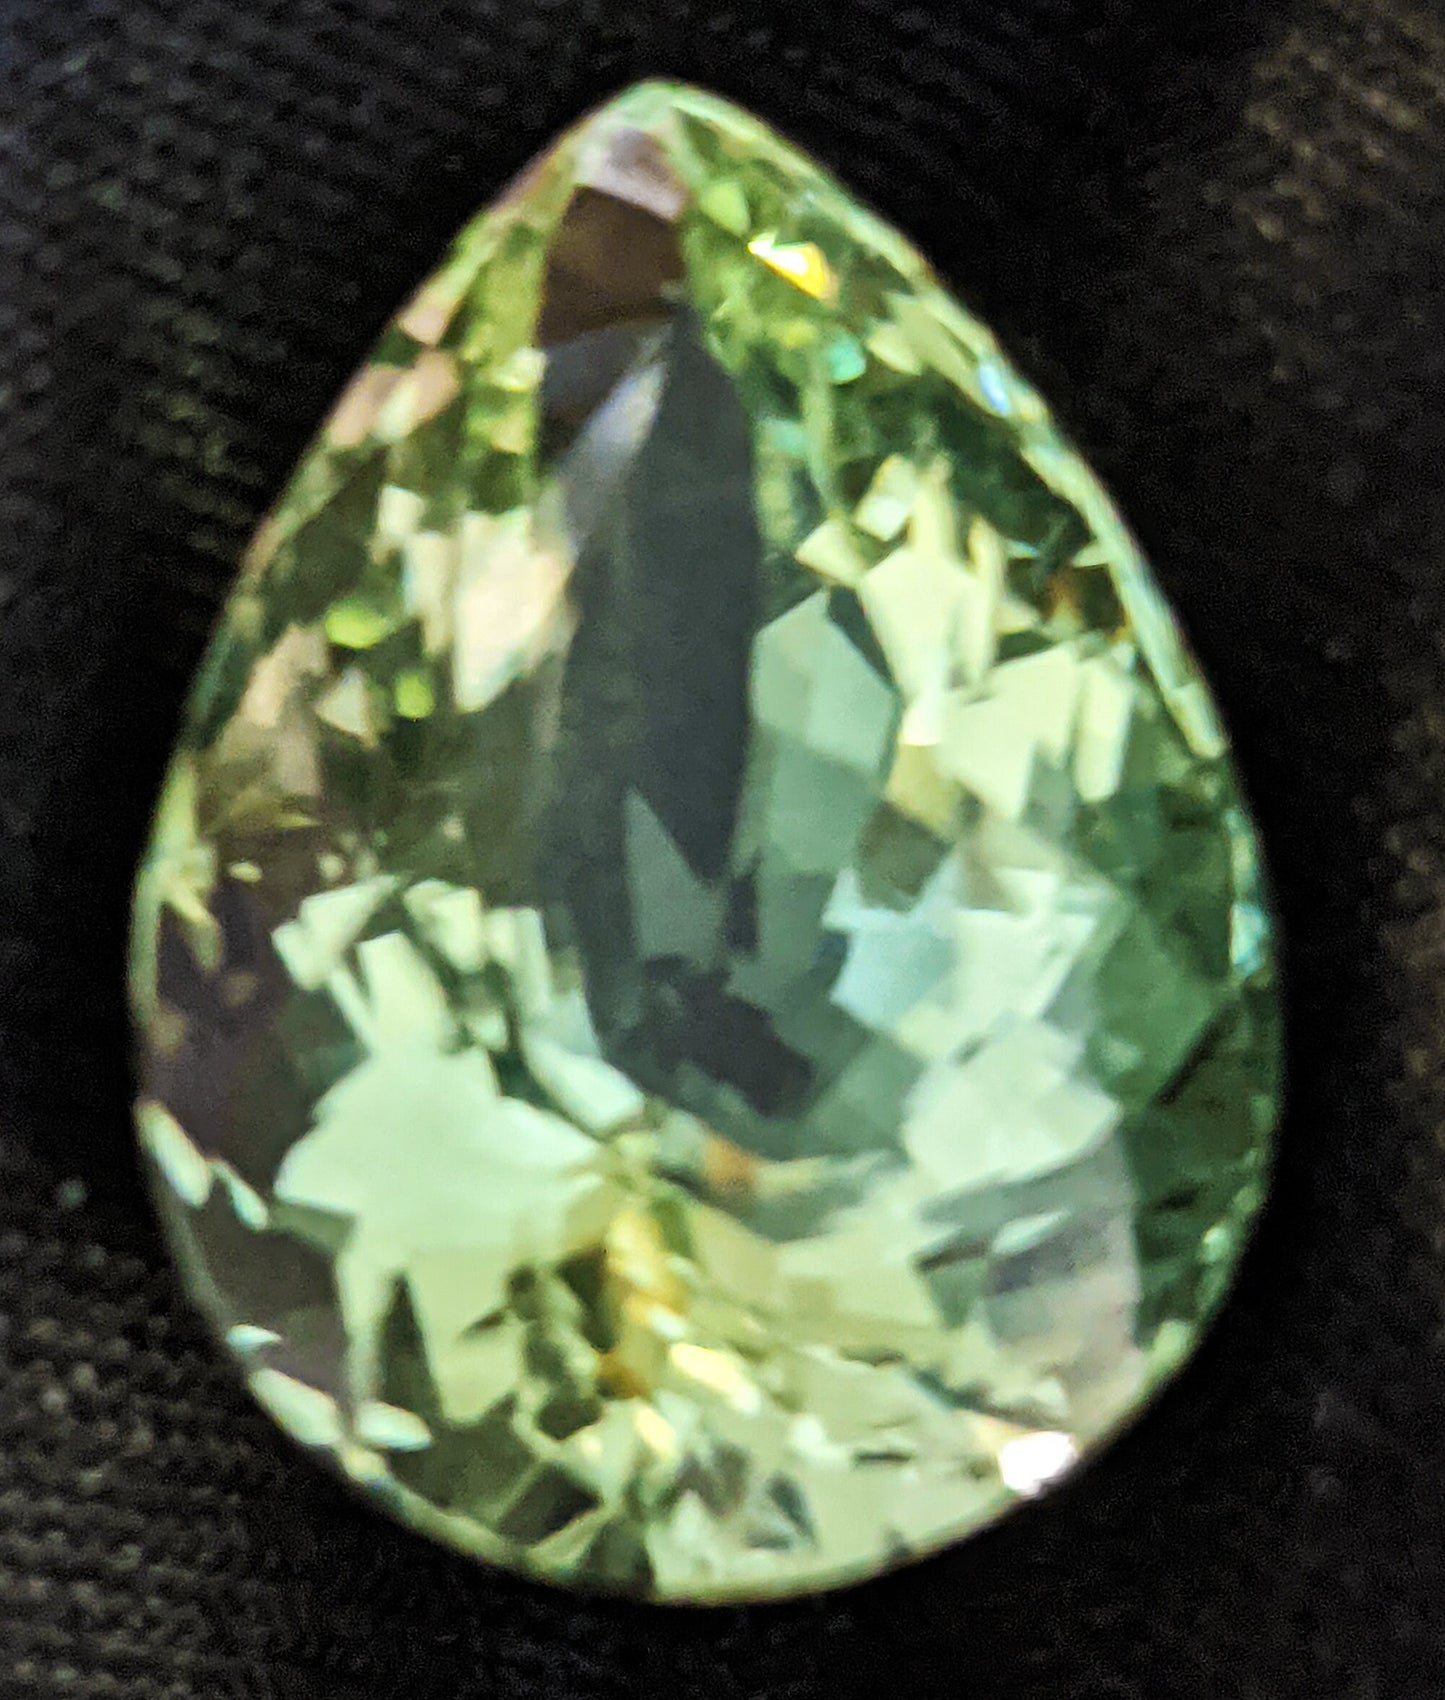 RARE and BEAUTIFUL exotic 19.07 carat mint-green Beryl gem from Brazil.